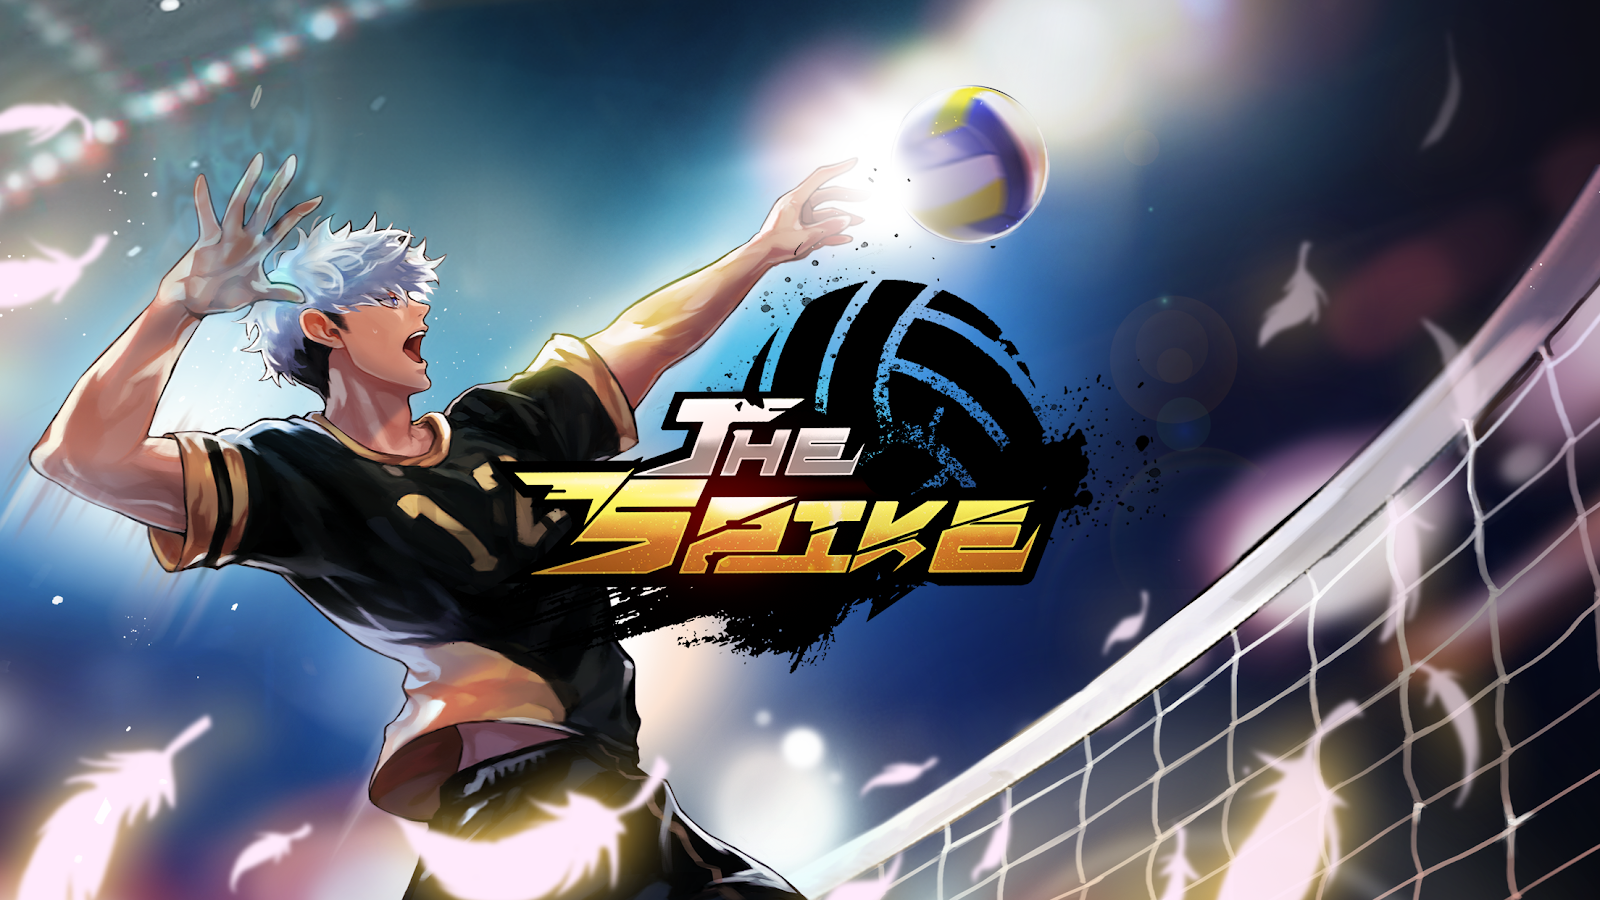 Промокоды зе спайке. Игра the Spike. The Spike Volleyball игра. The Spike Volleyball story. Nishikawa волейбол the Spike.